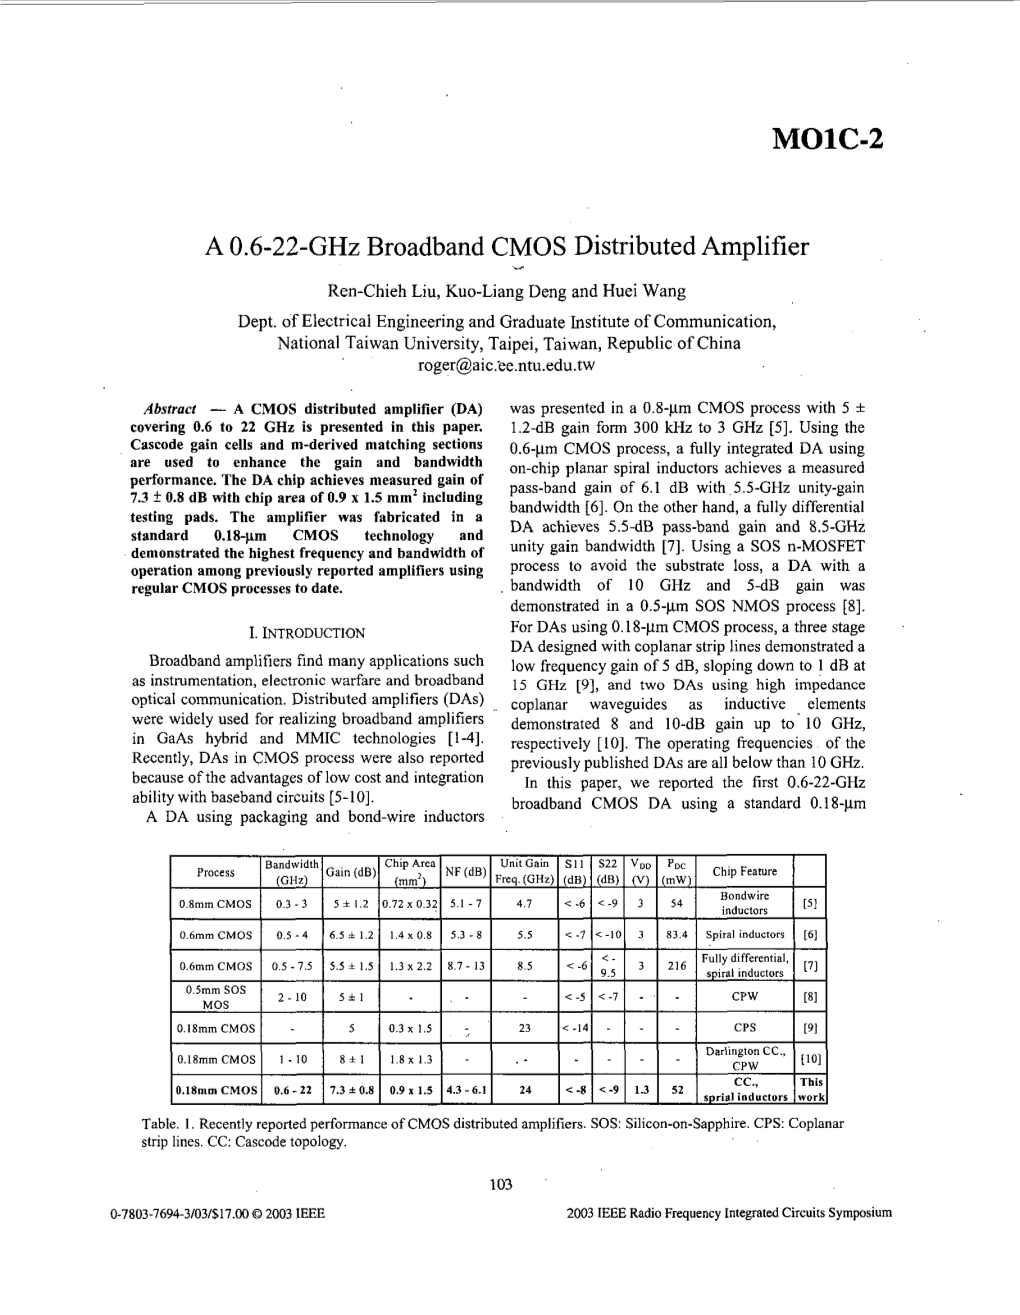 A 0.6-22-Ghz Broadband CMOS Distributed Amplifier